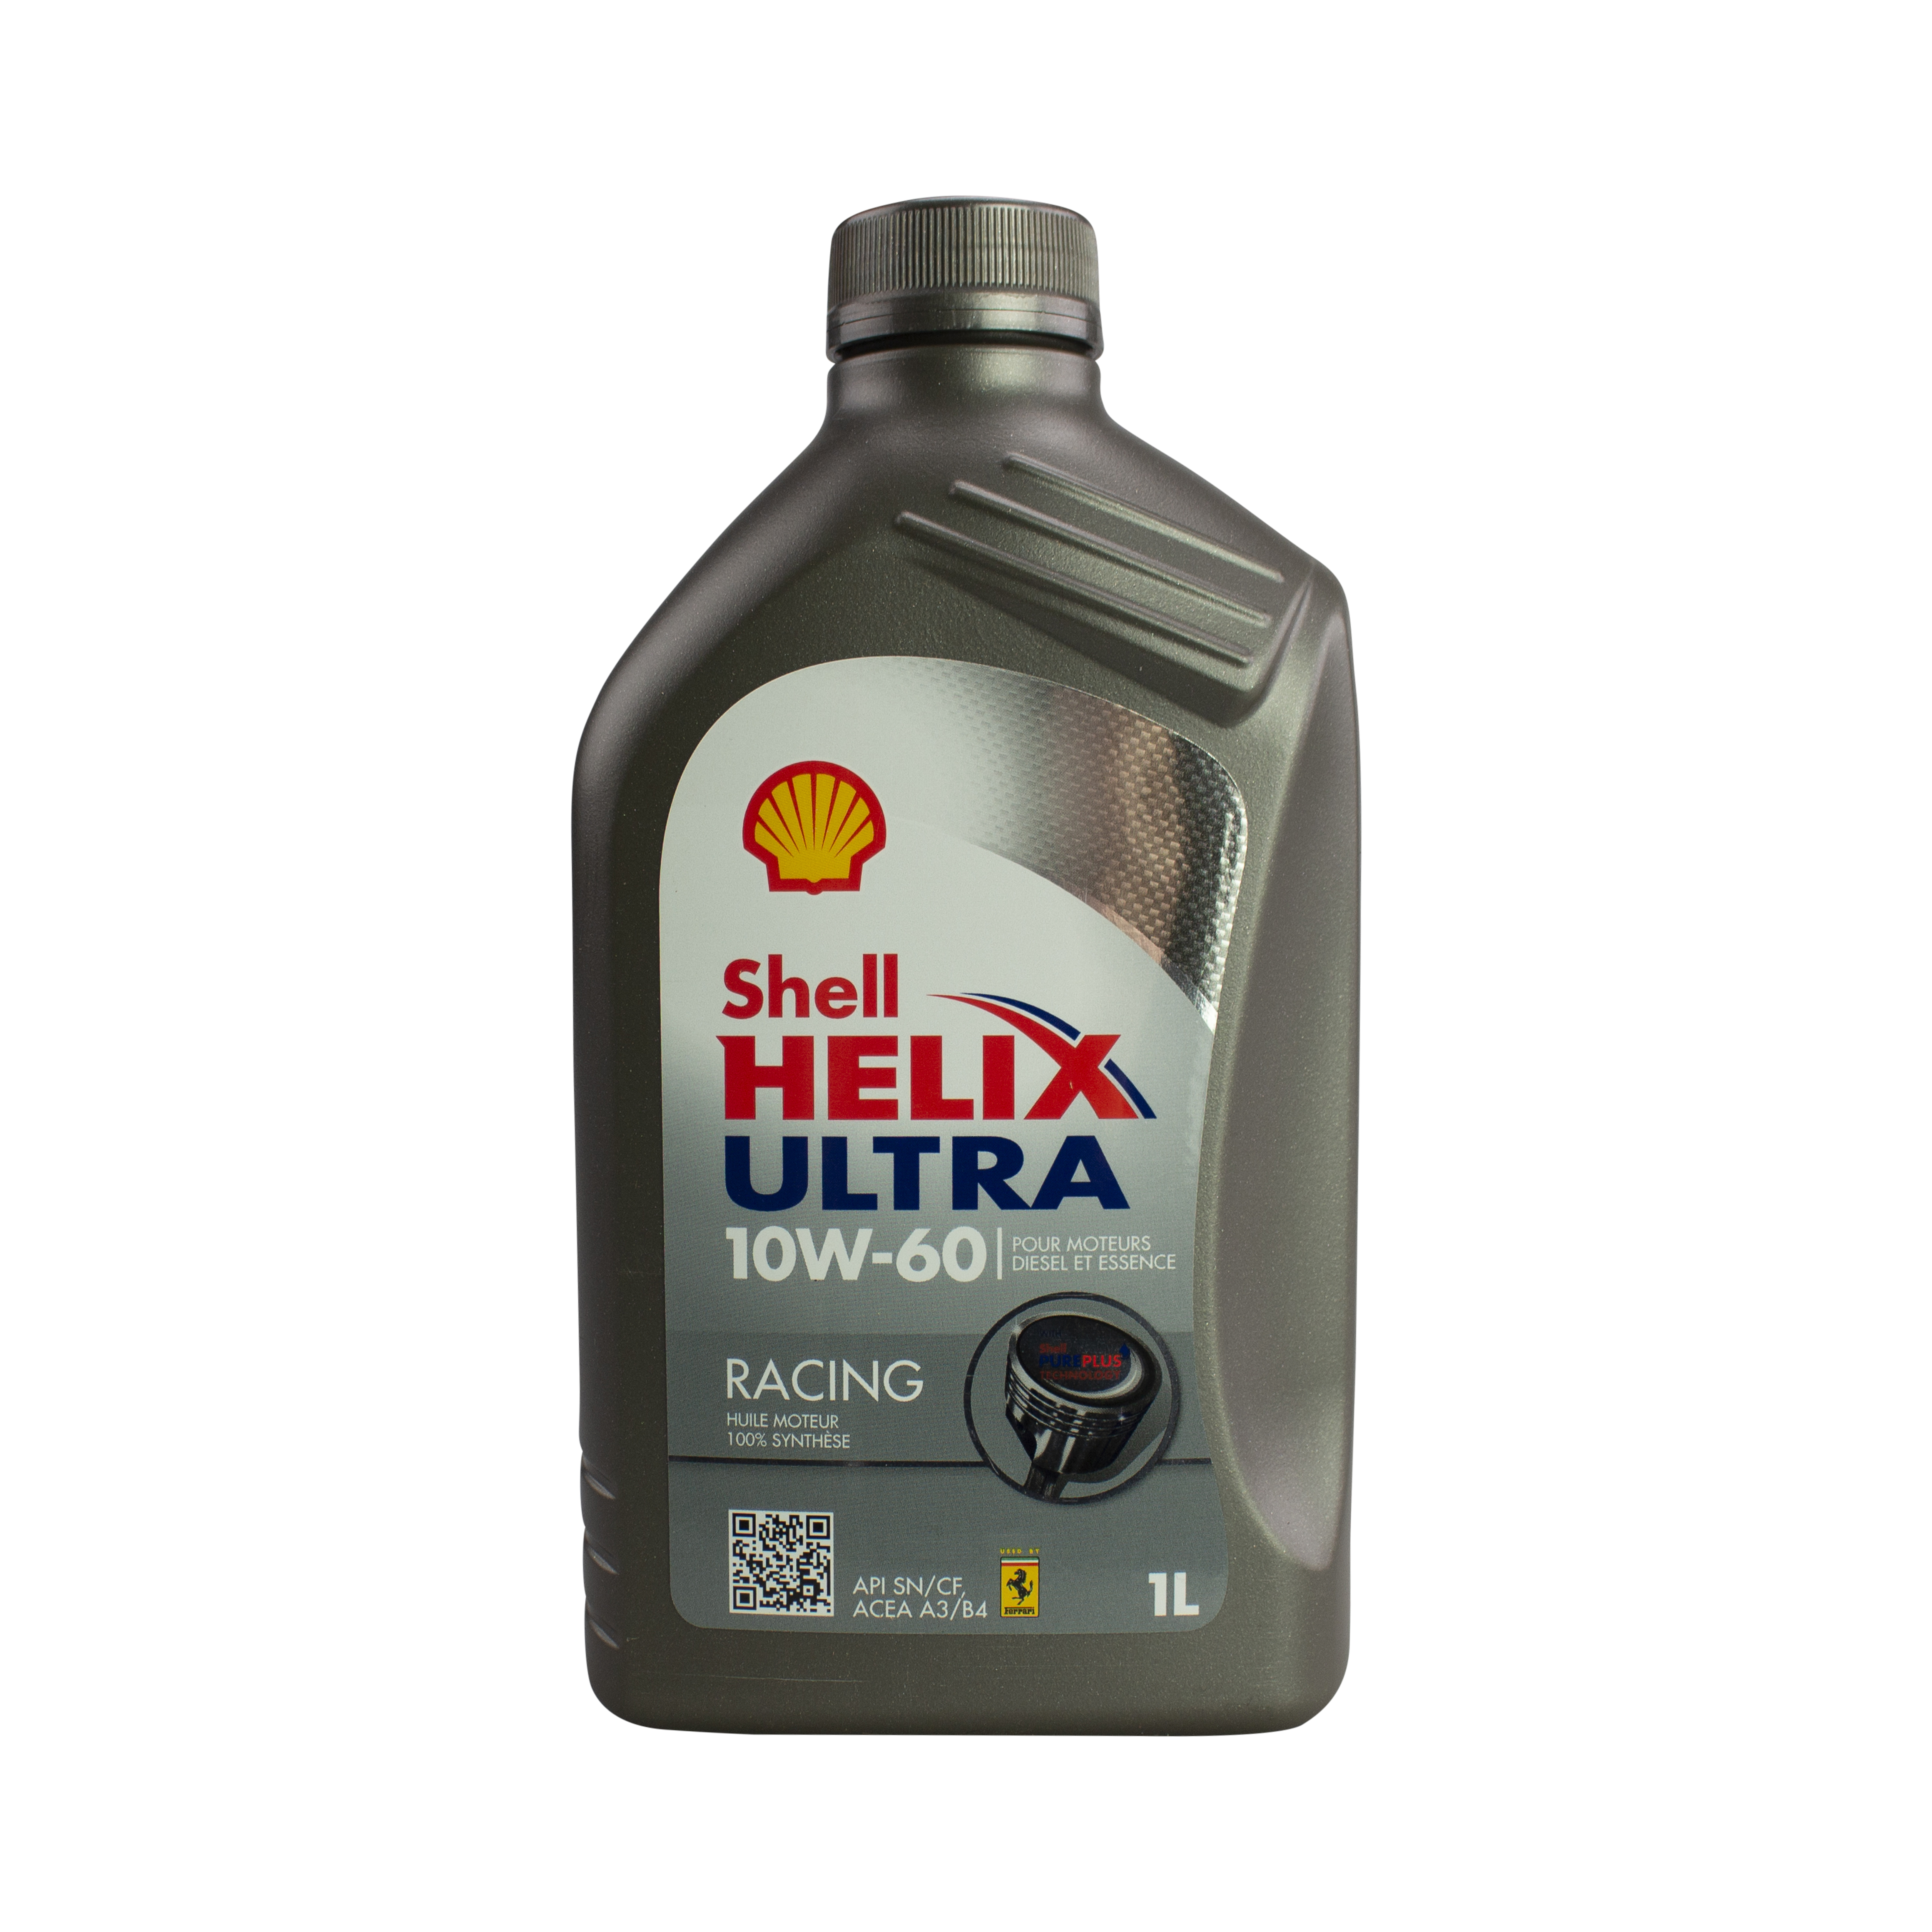 Shell Helix Ultra 10W-60 for Ferrari and Maserati